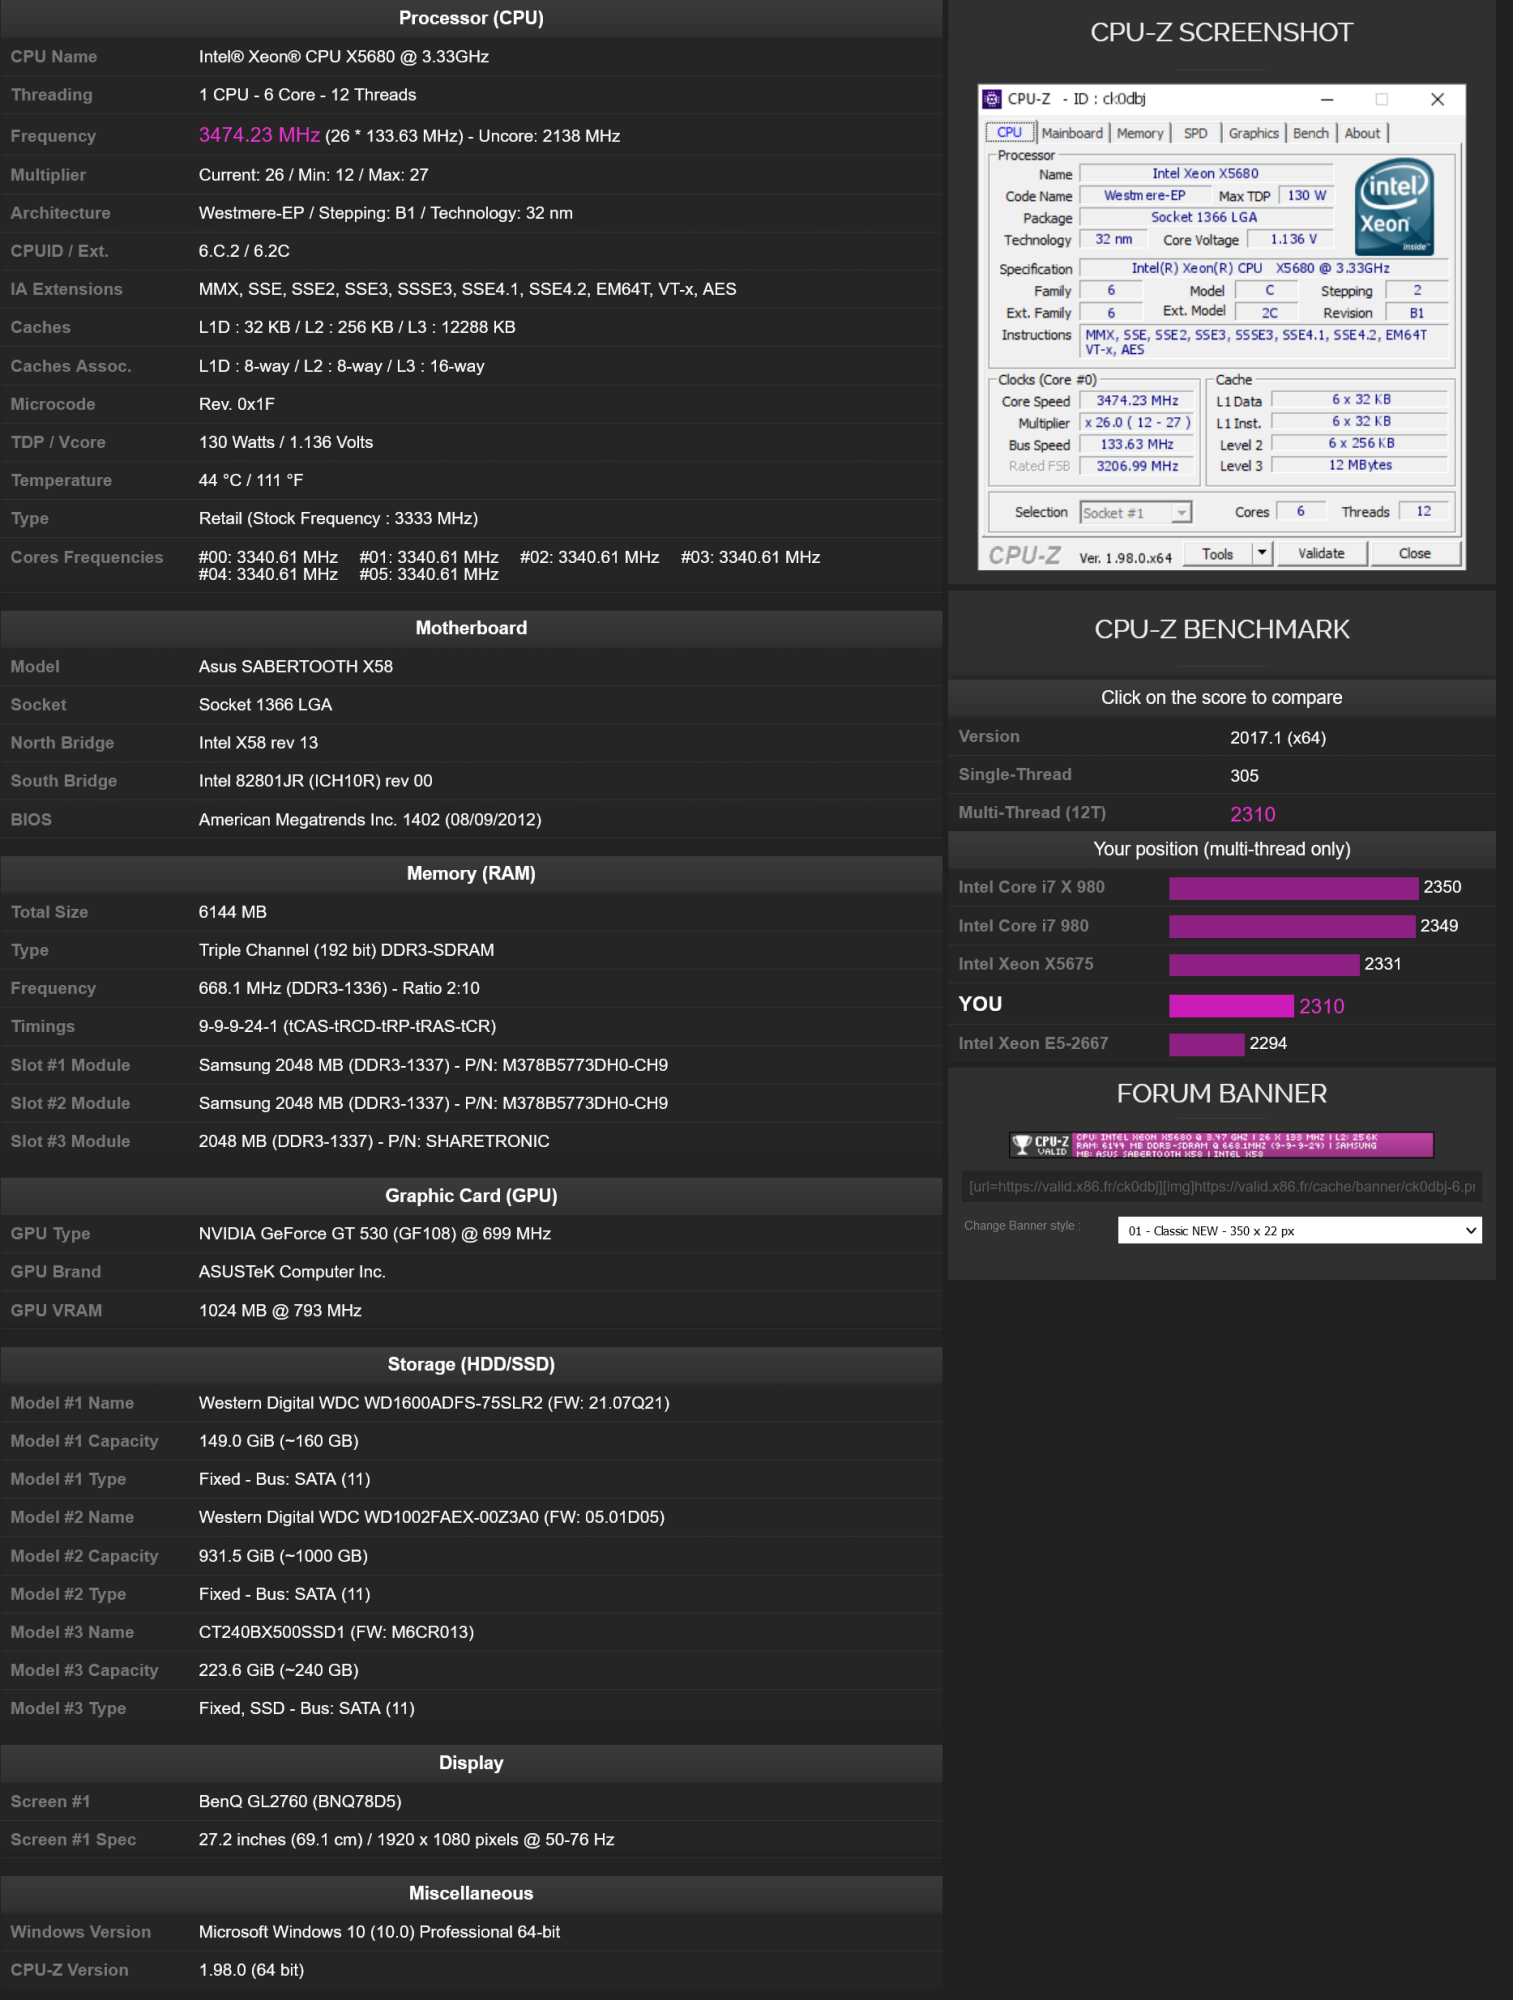 Screenshot 2021-11-16 at 12-57-11 Intel Xeon X5680 3474 23 MHz - CPU-Z VALIDATOR.png